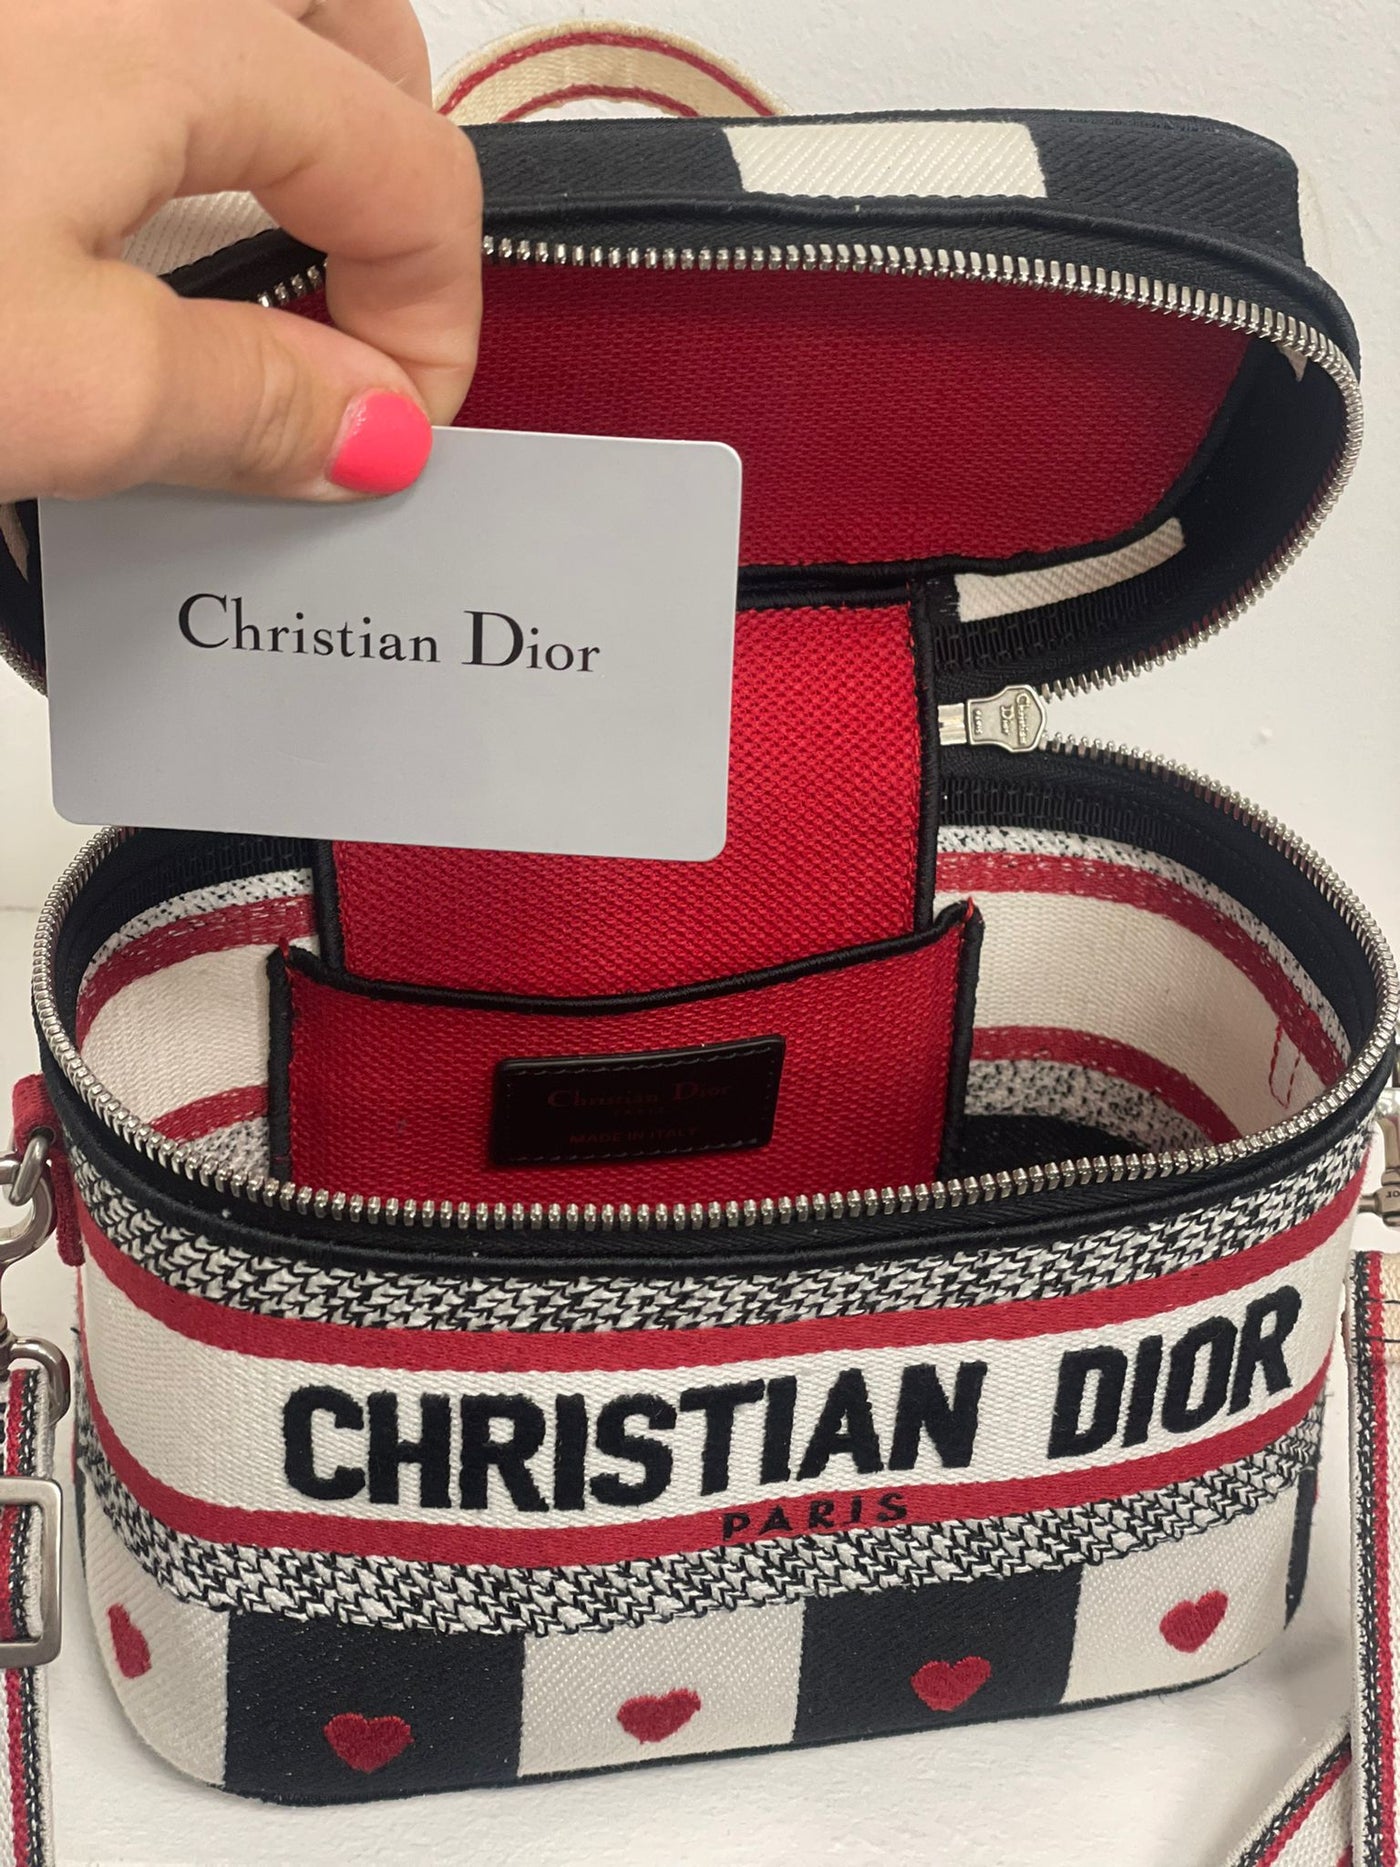 Christian Dior Dior amour vanity case Handbag